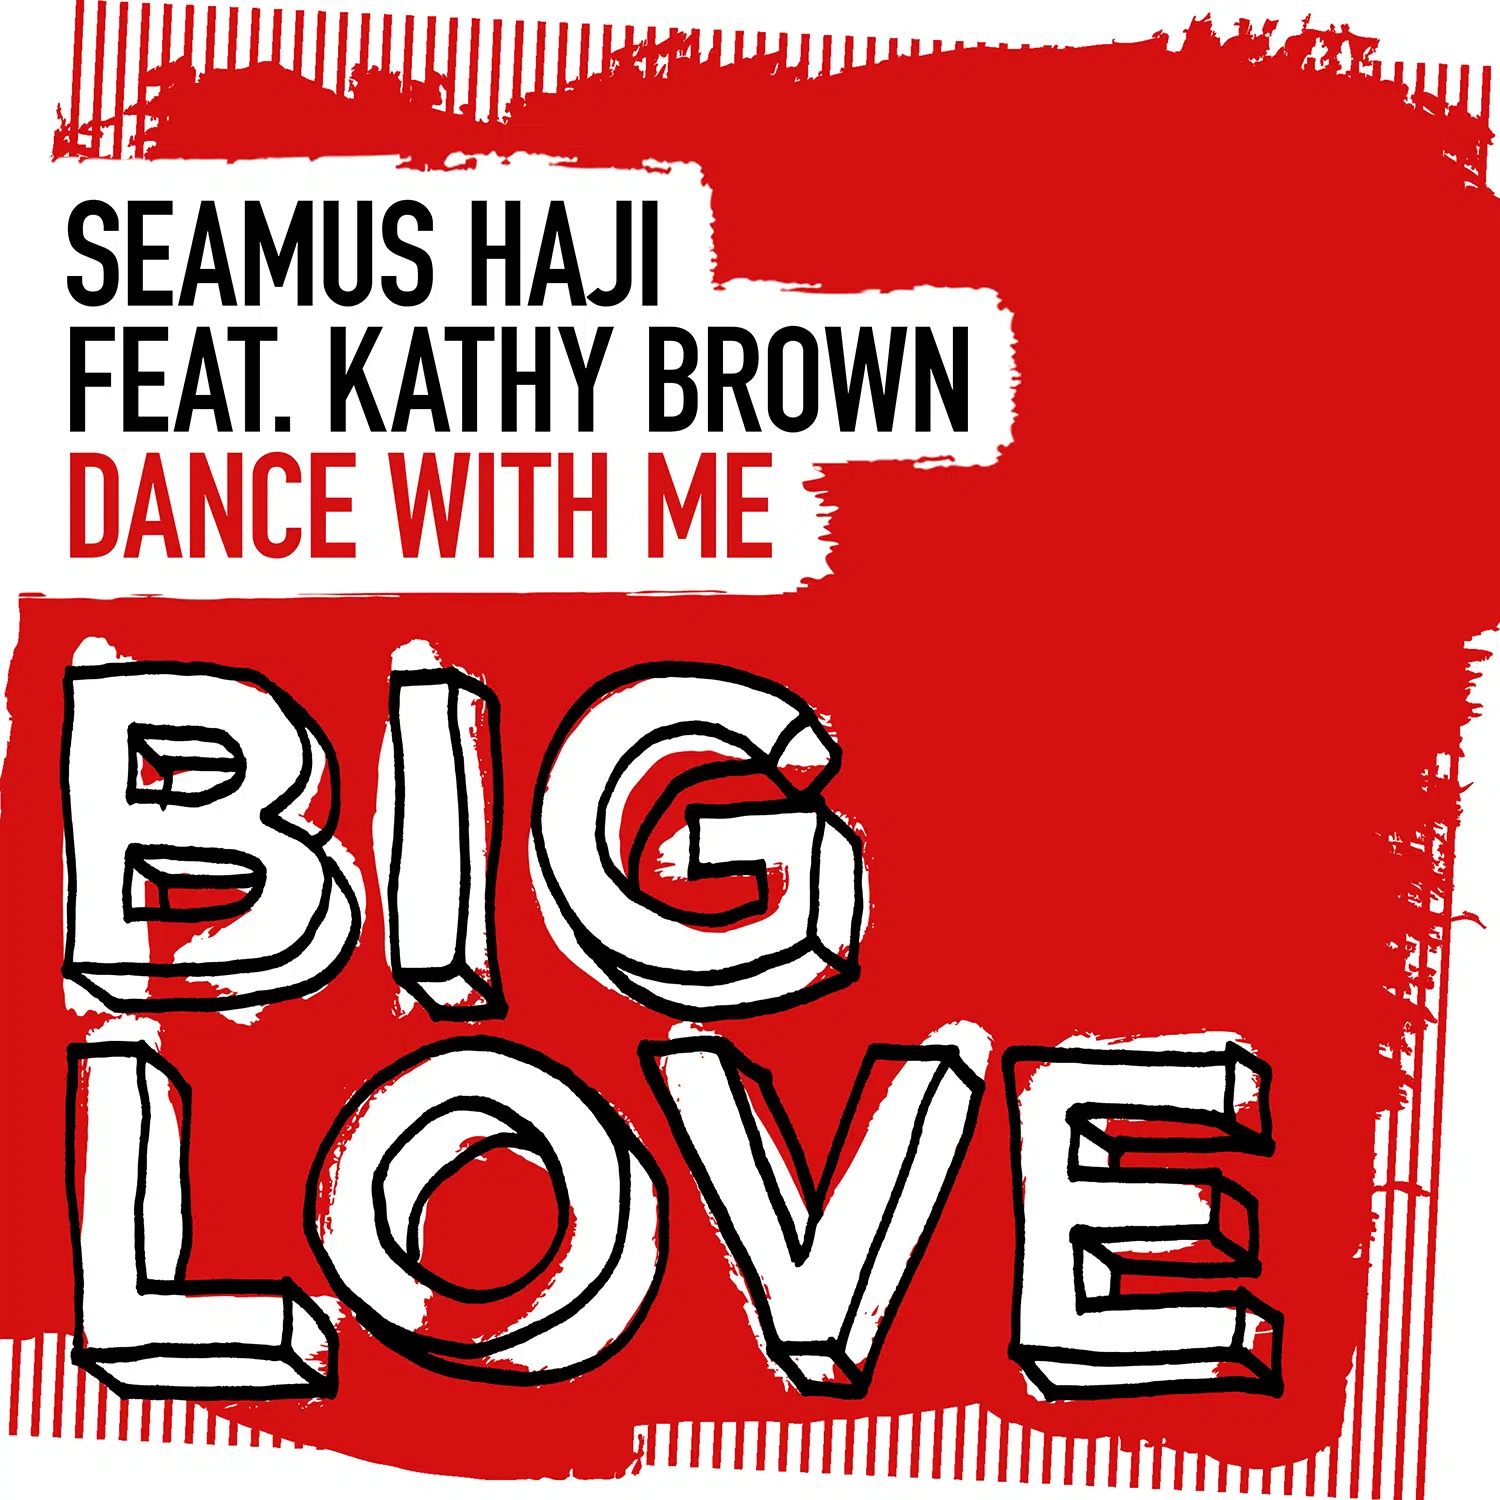 Seamus Haji featuring Kathy Brown “Dance With Me”